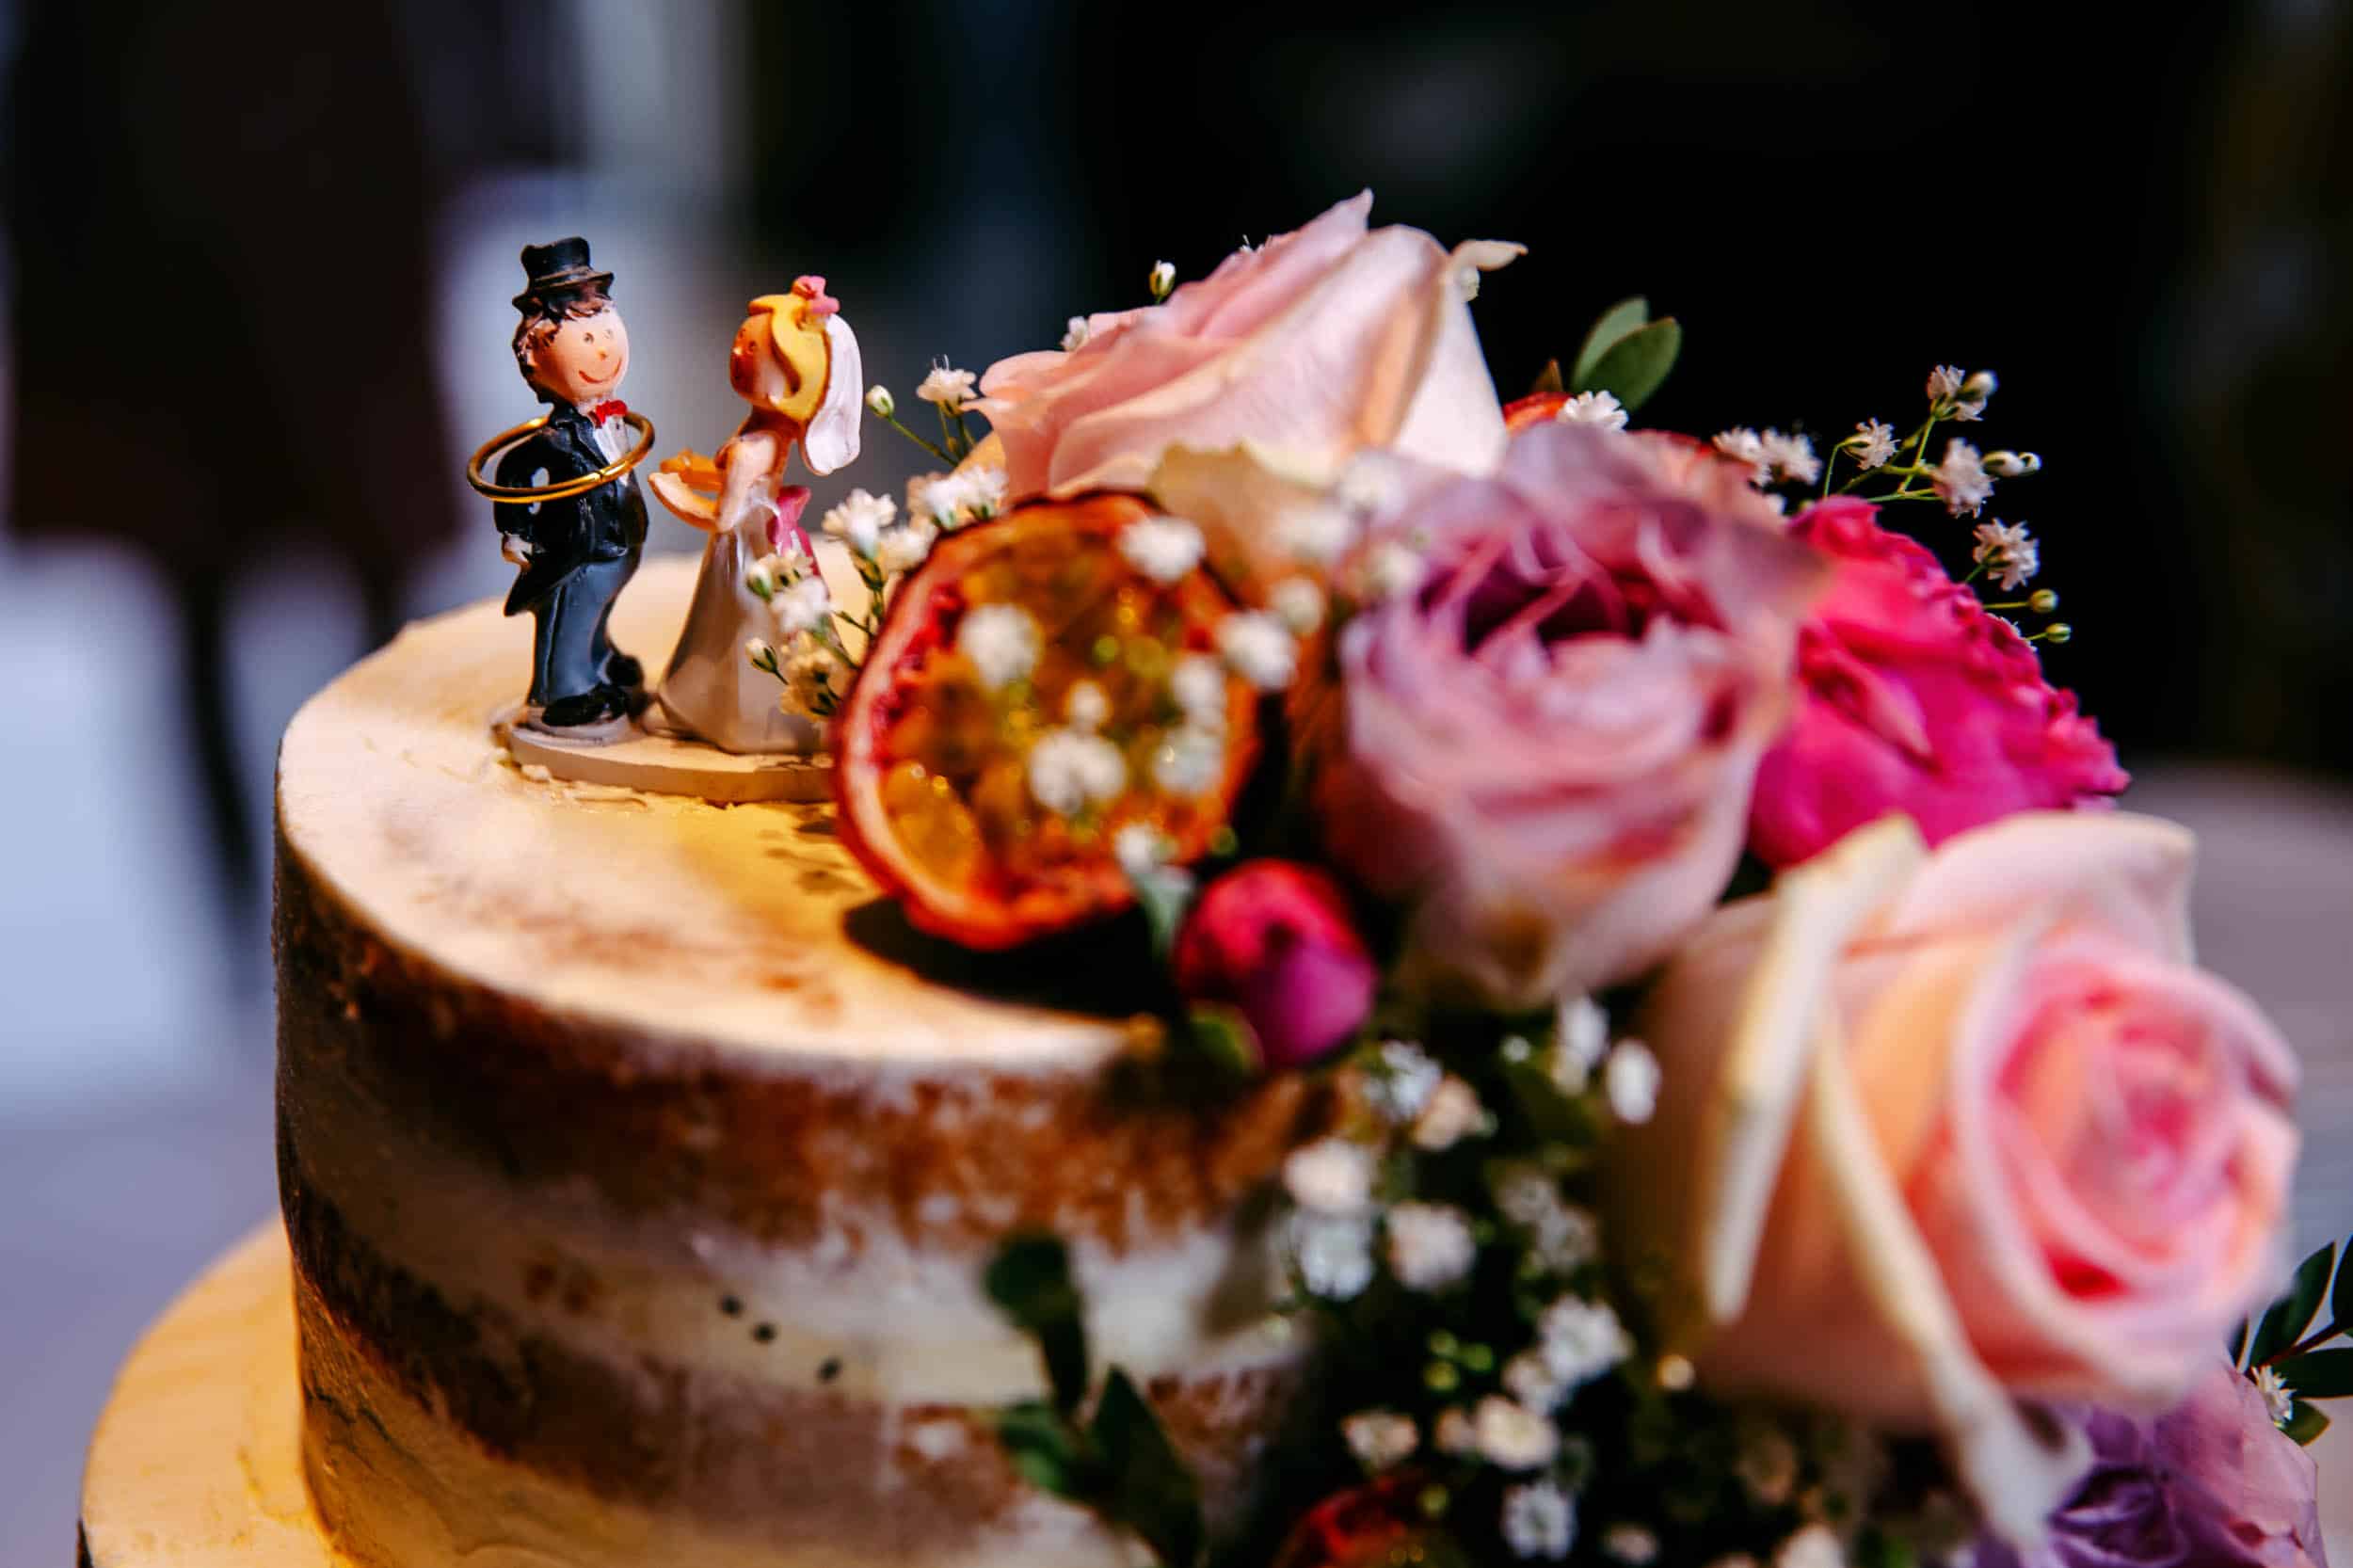 A wedding cake with a figurine on top.